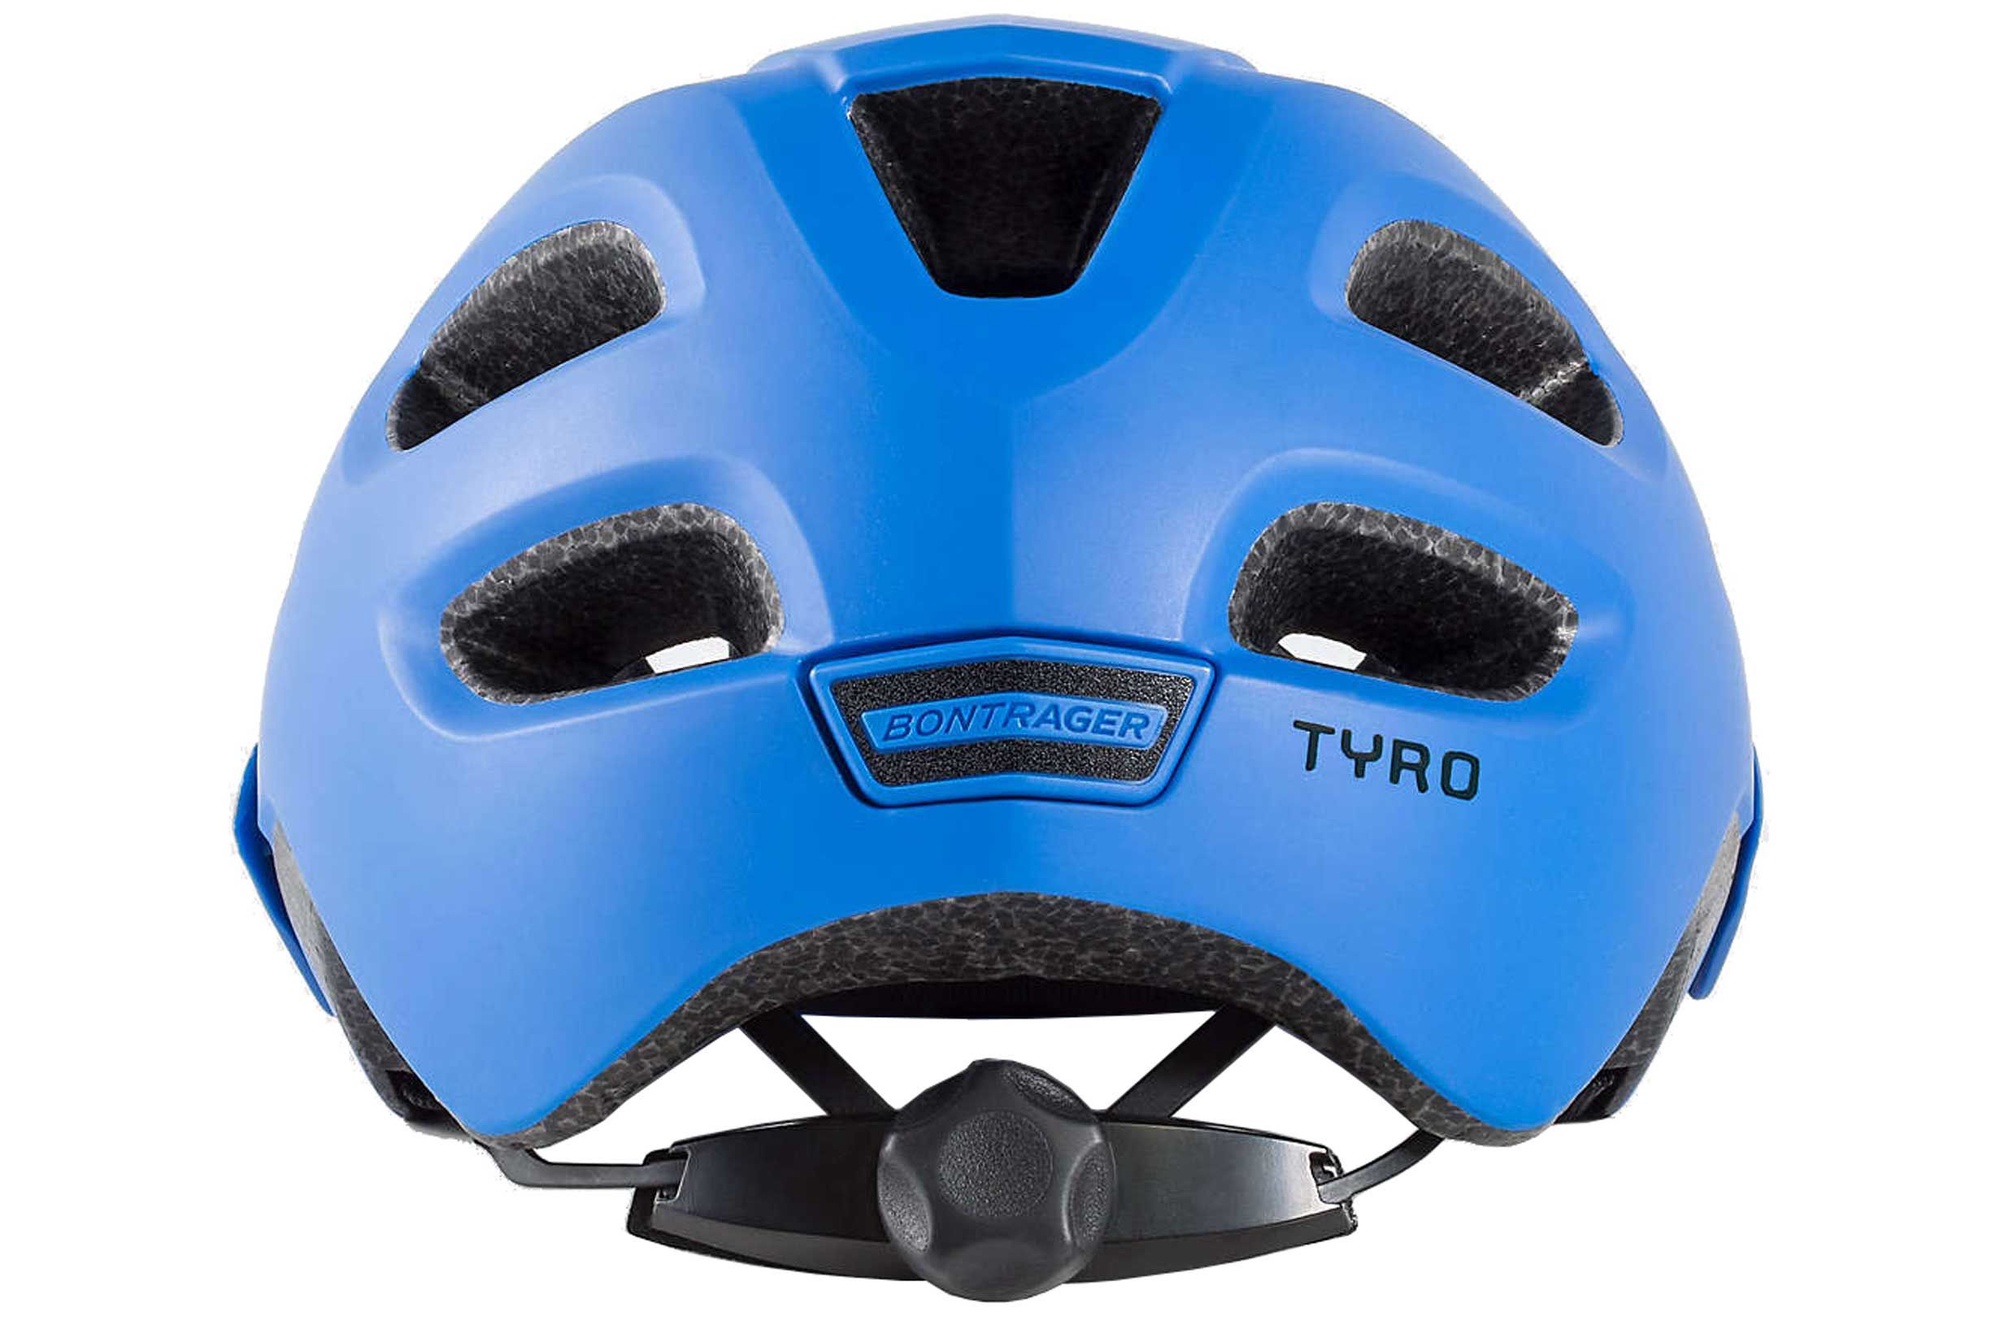 tyro helmet